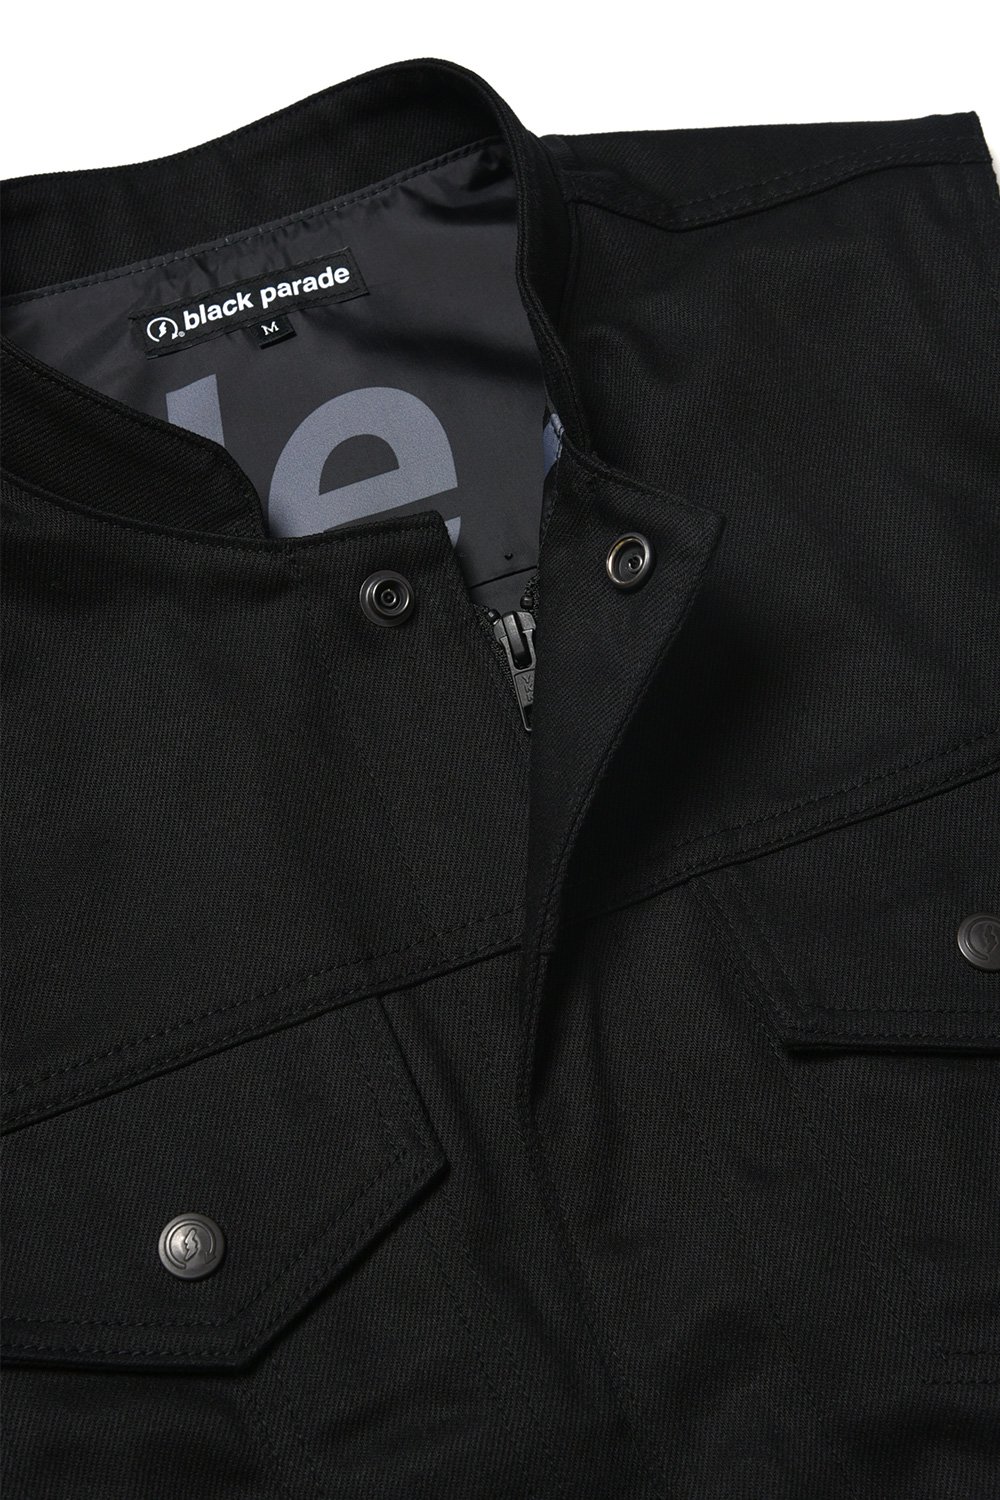 BLACK PARADE(ブラックパレード) デニムベスト Shorty Denim Vest 通販